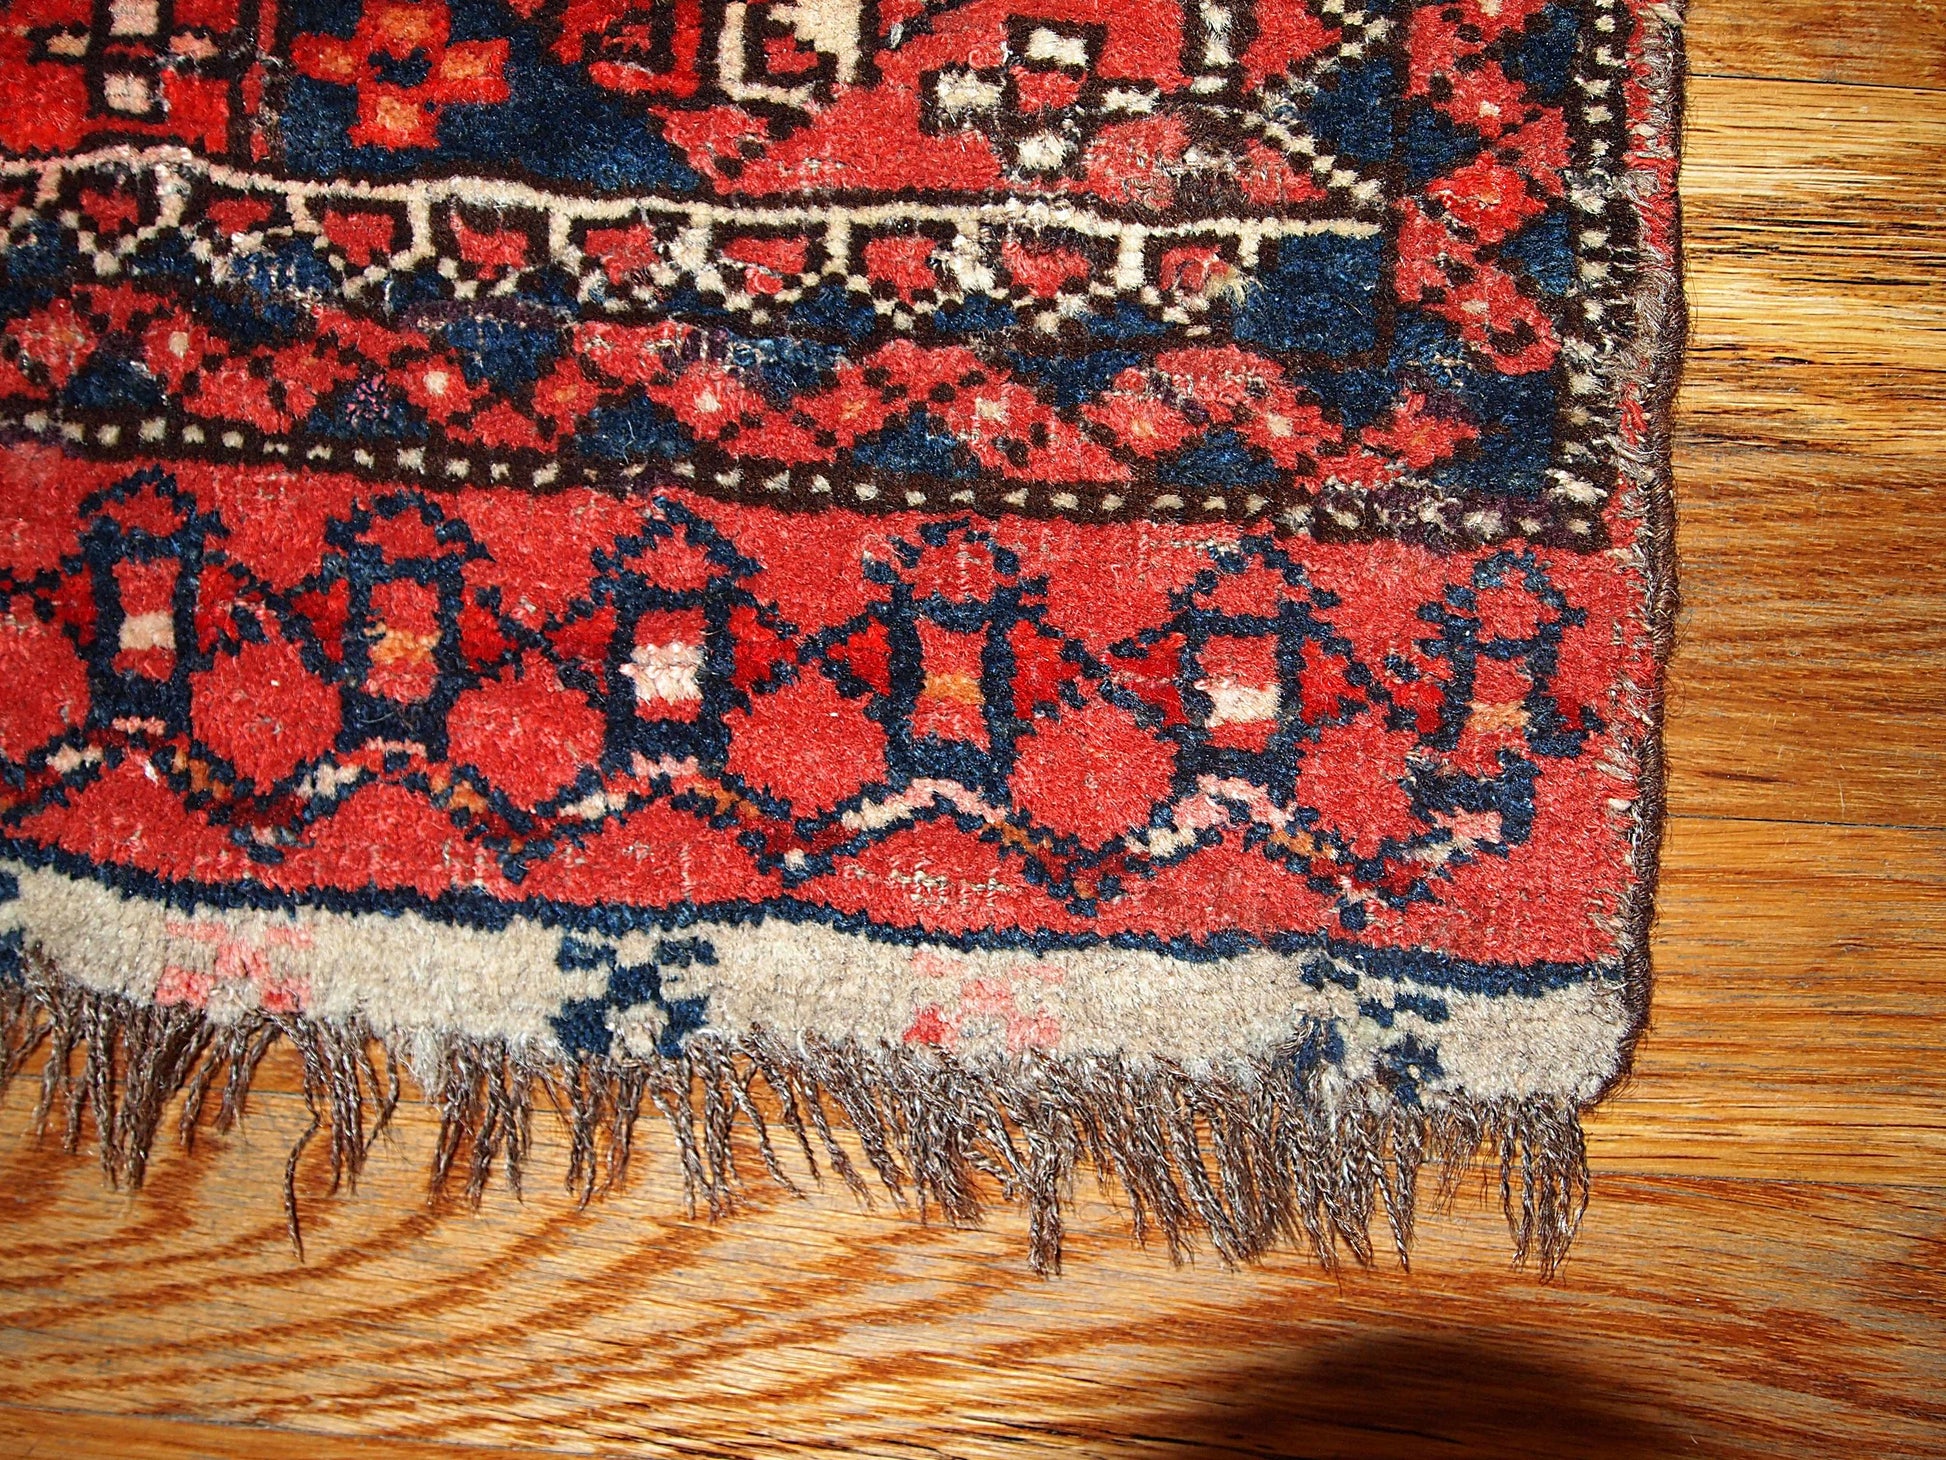 Handmade antique collectible Uzbek bag face 1.4' x 1.6' (42cm x 48cm) 1870s - 1B352 - One Royal Art